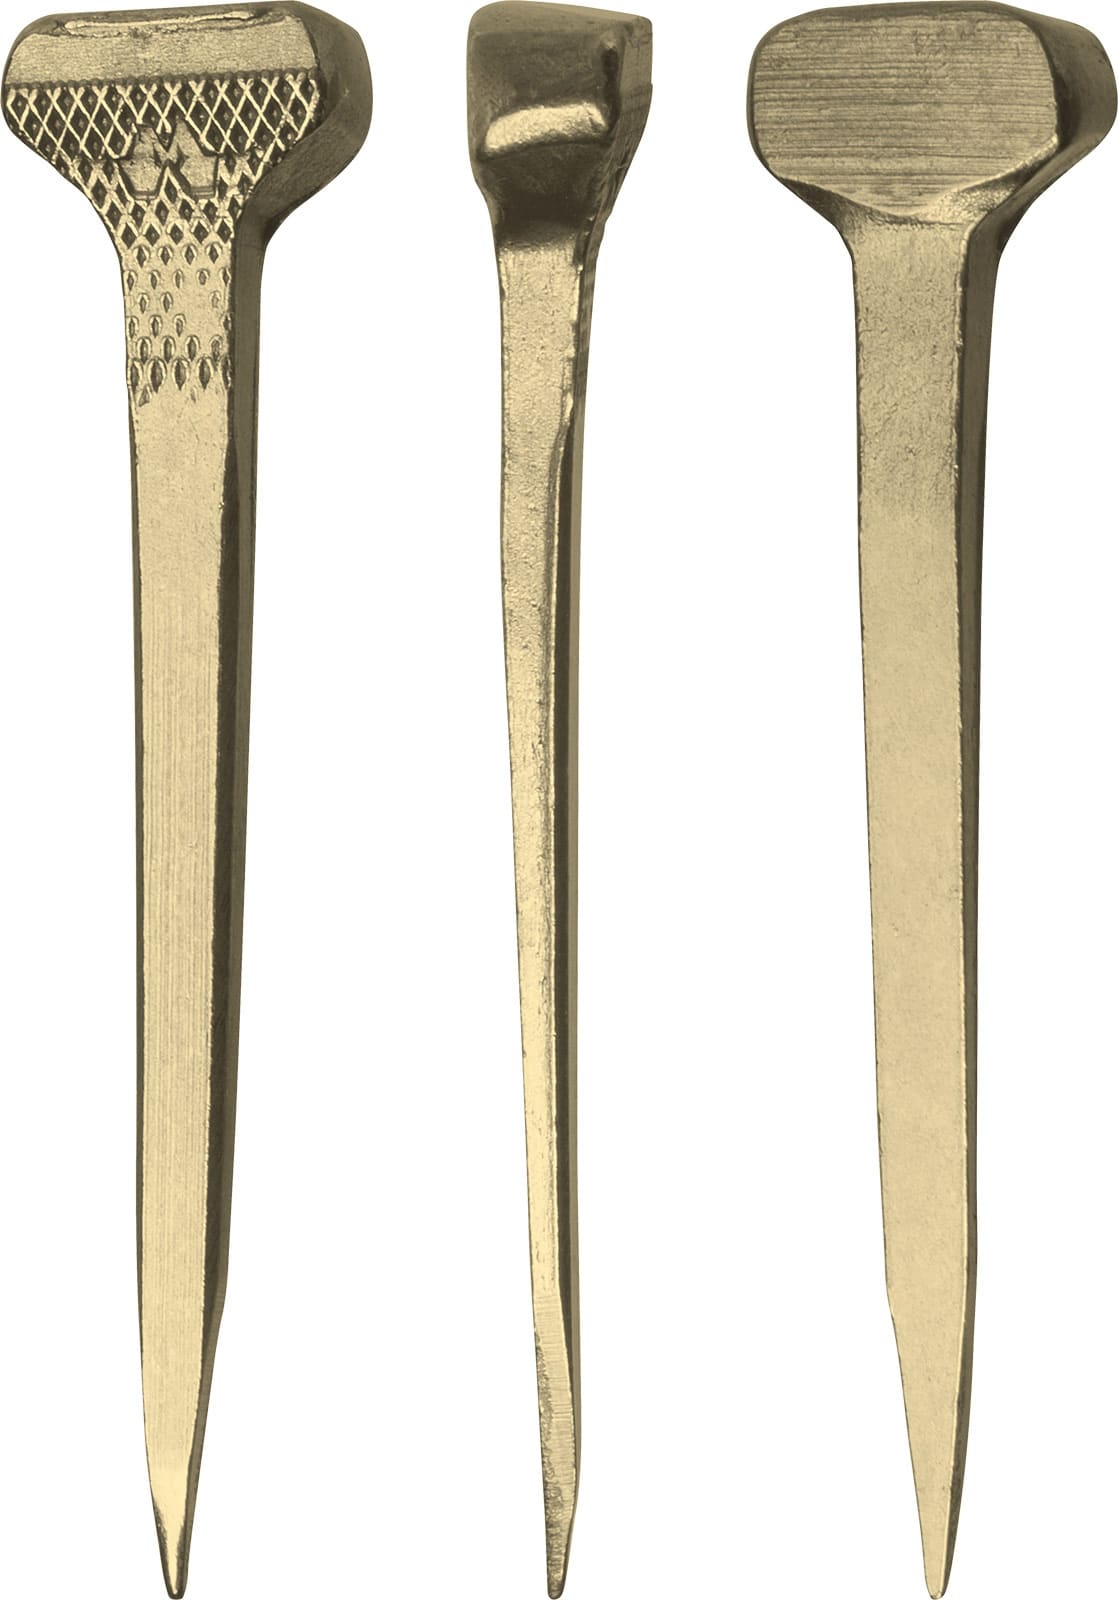 Mustad Endure HammerHead hoof nails, front, side and back views